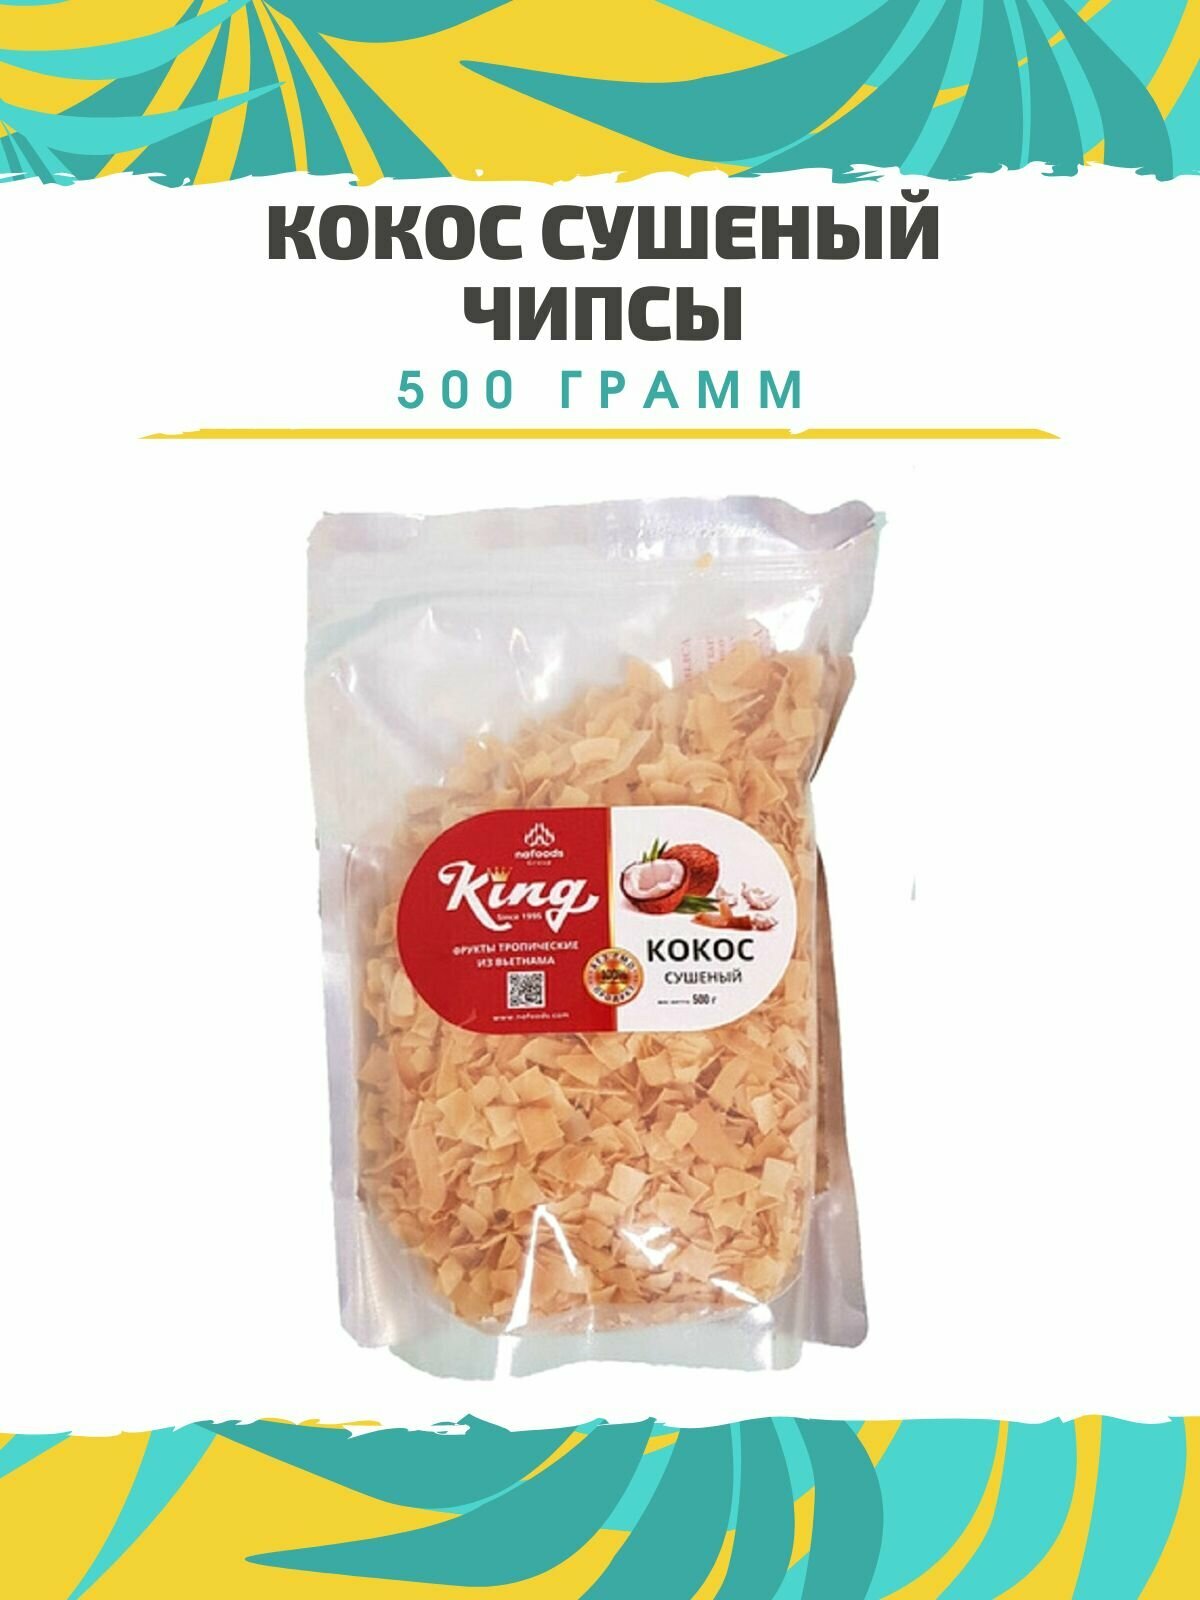 Кокос сушеный (чипсы) King Nafoods Group без сахара 500г